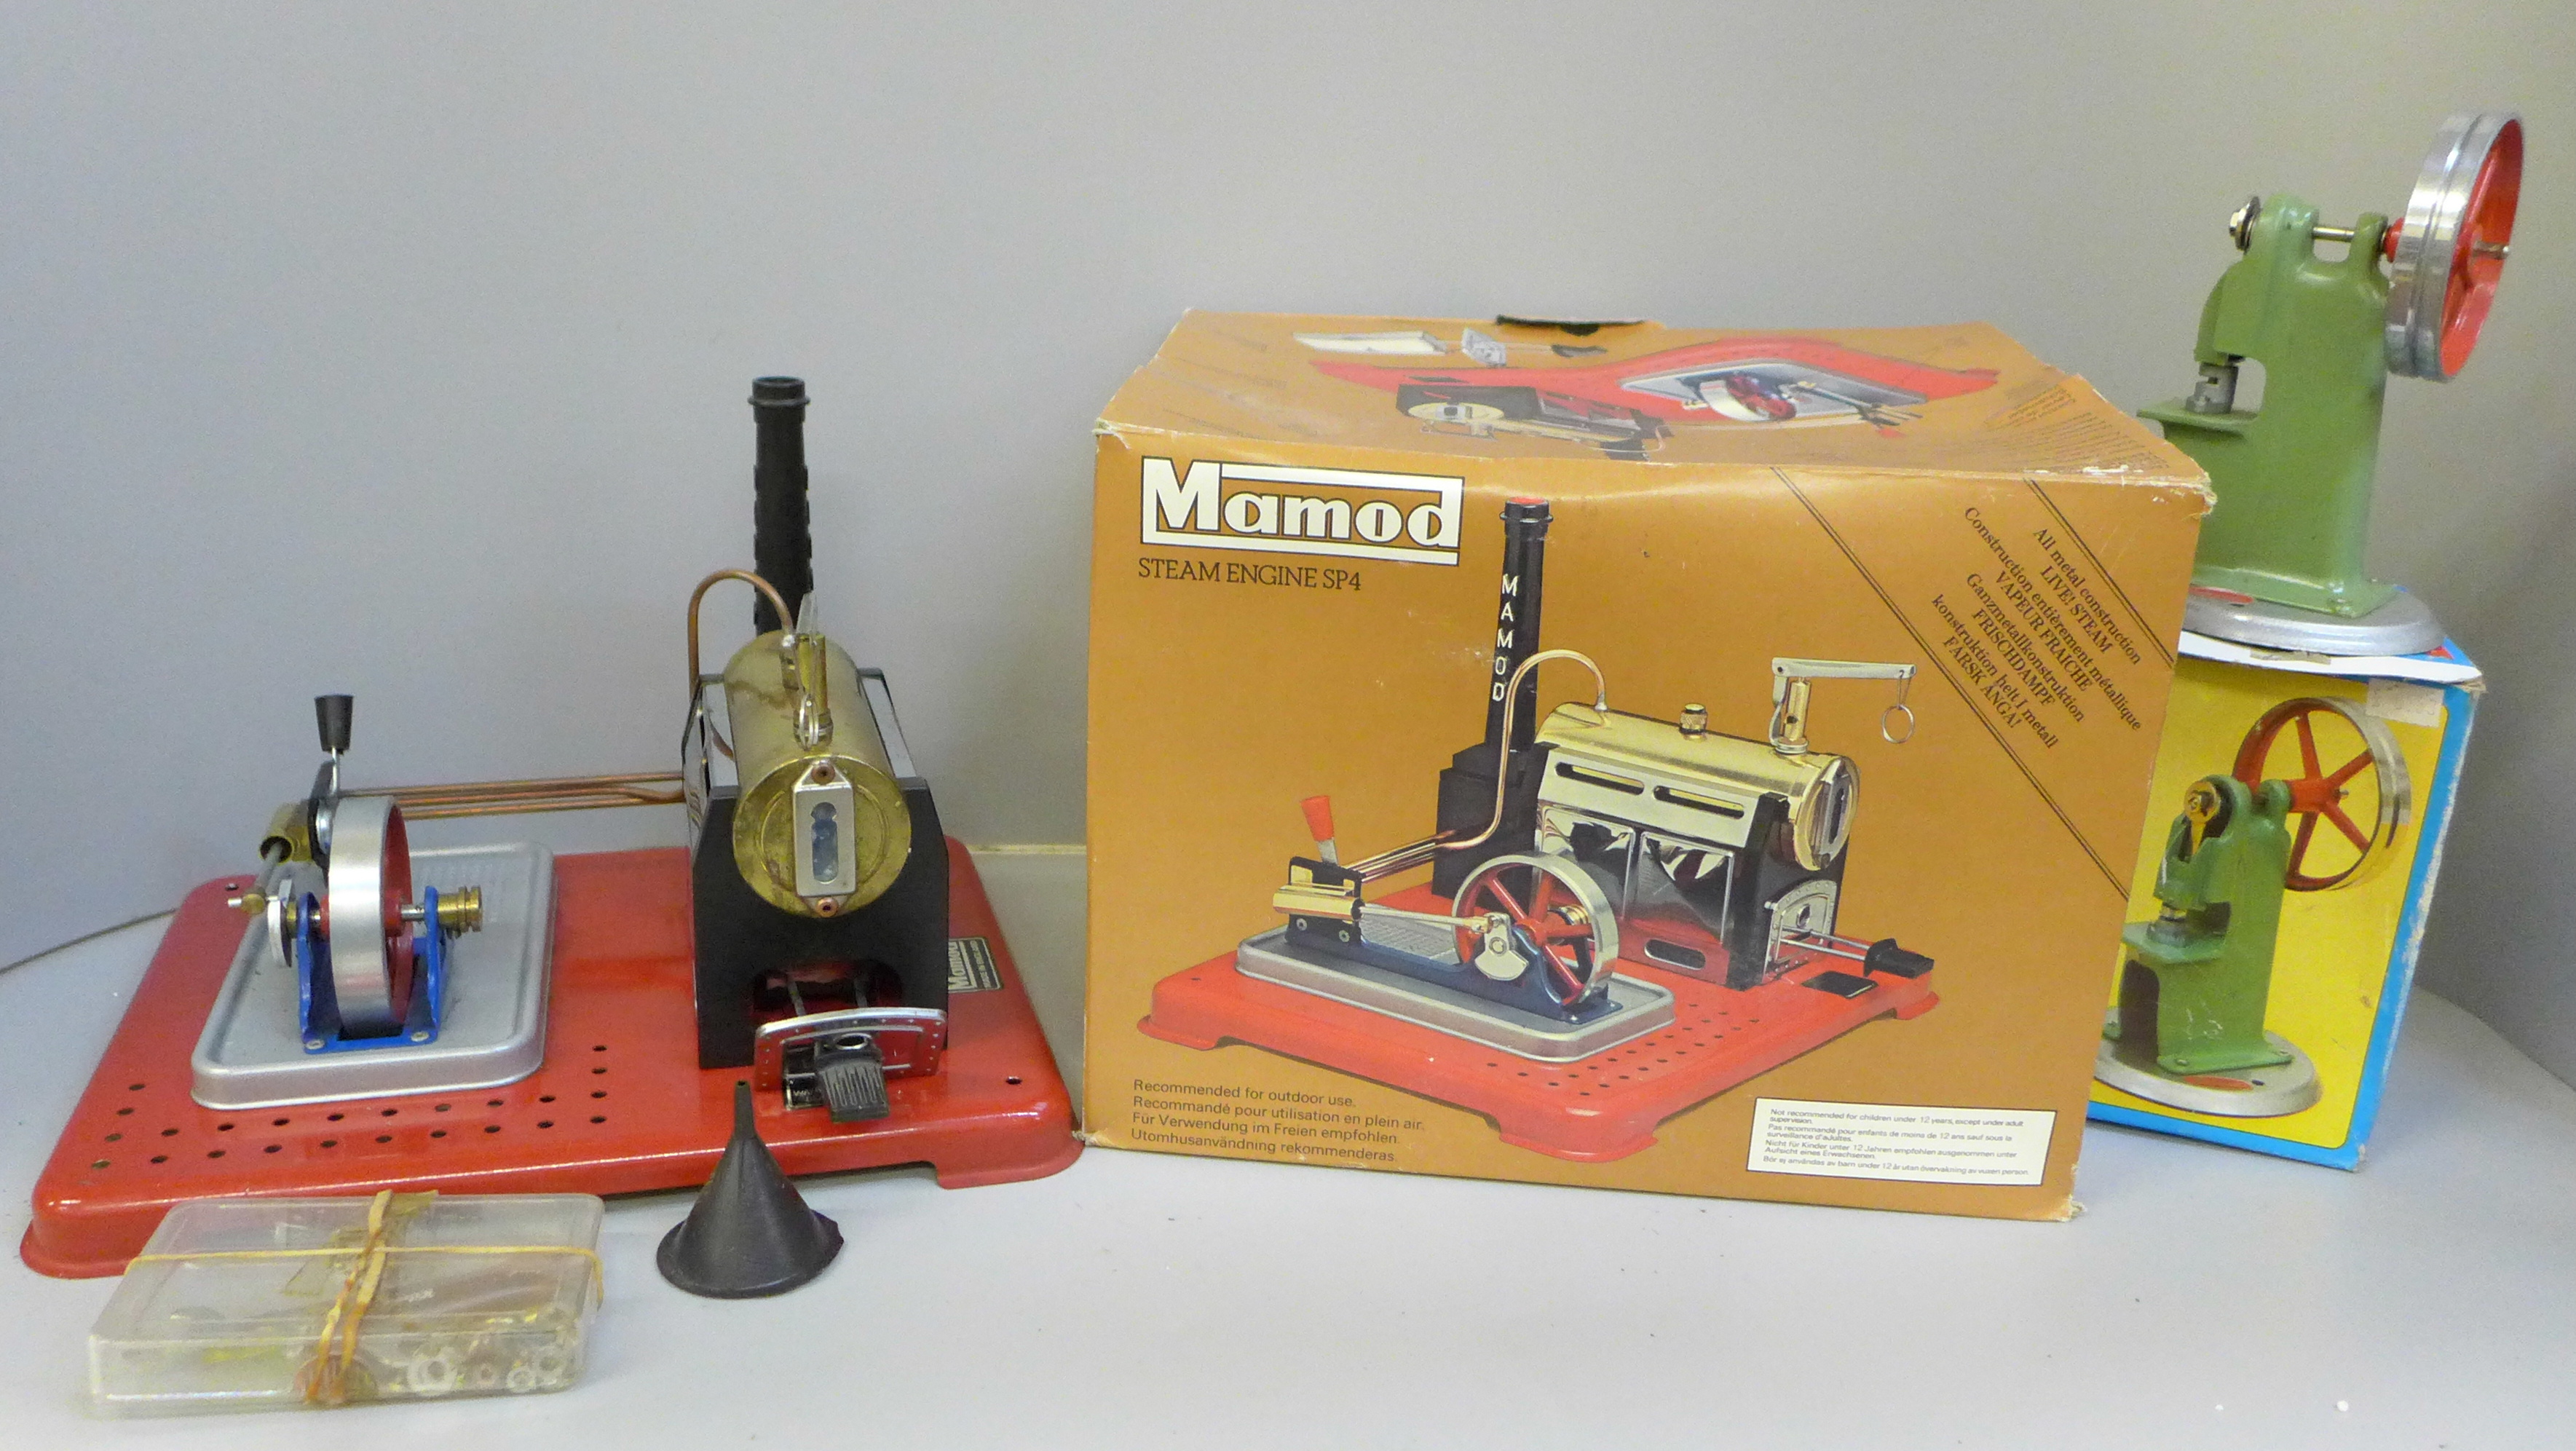 A Mamod Steam Engine SP4 in original box and an Eccentric Press (Wilesco M59) in original box